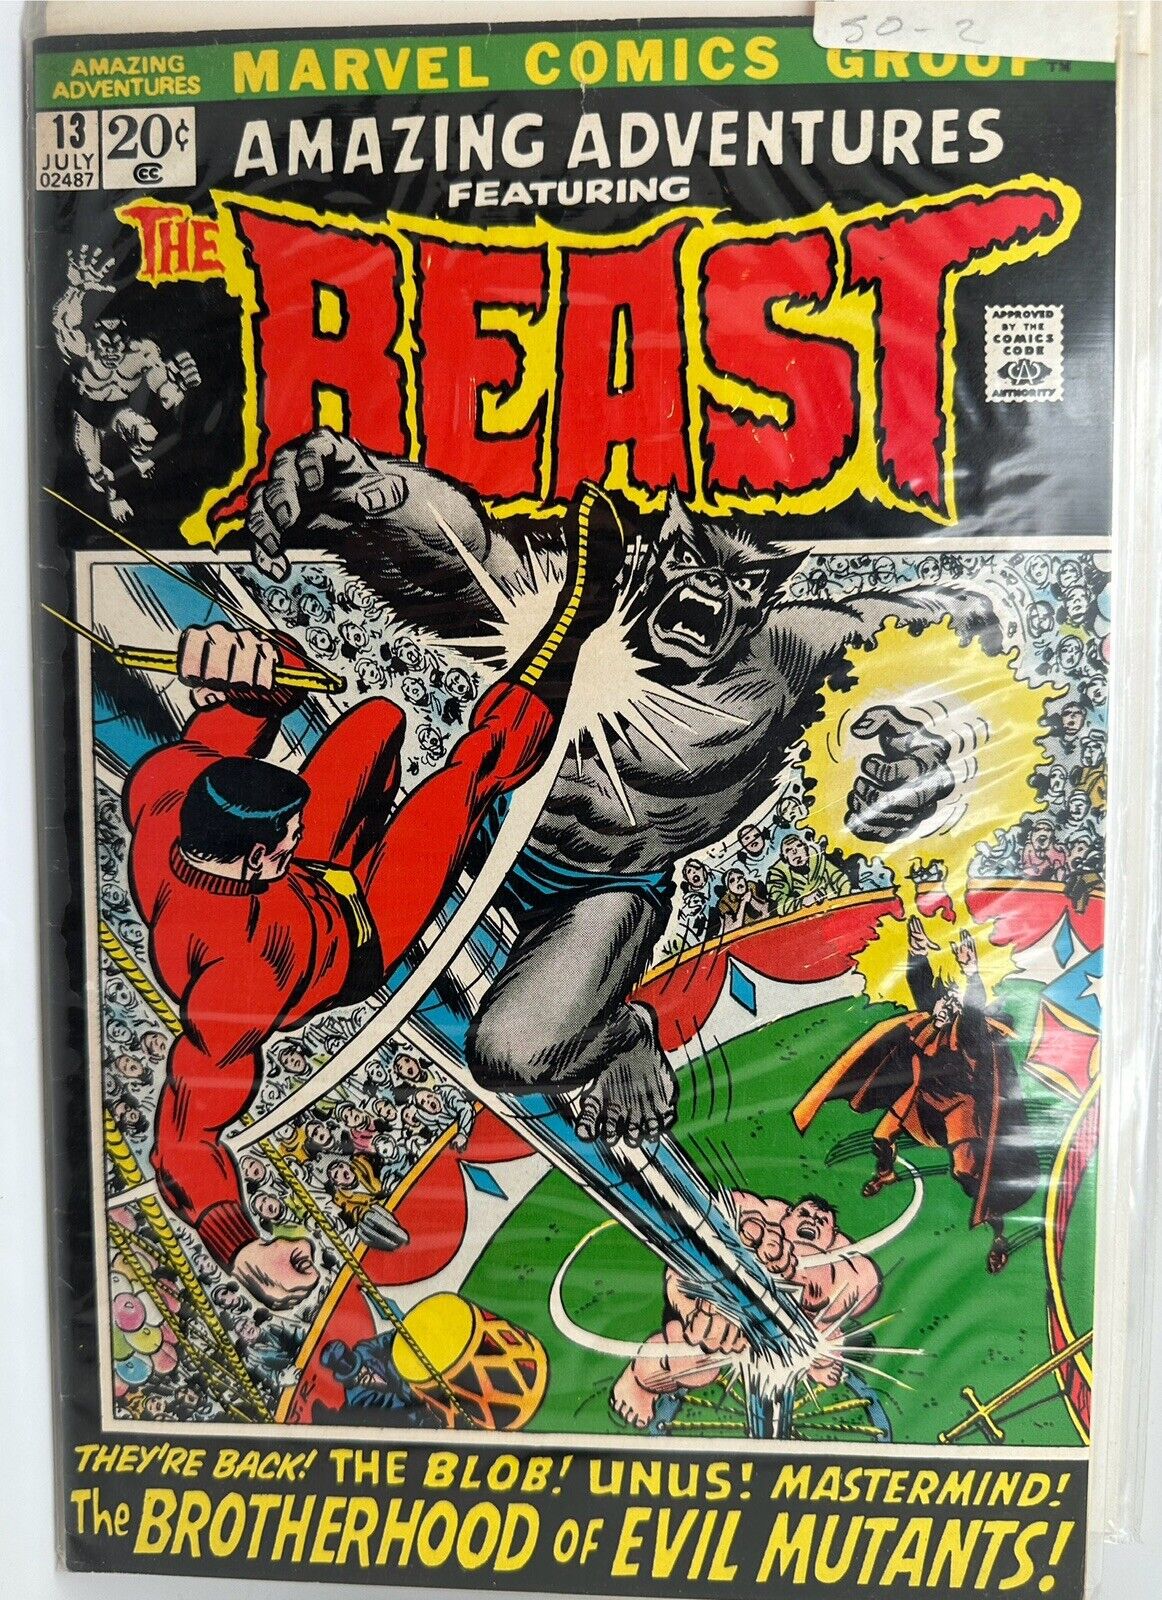 Amazing Adventures #13 featuring the Beast vs Brotherhood of Evil Mutants